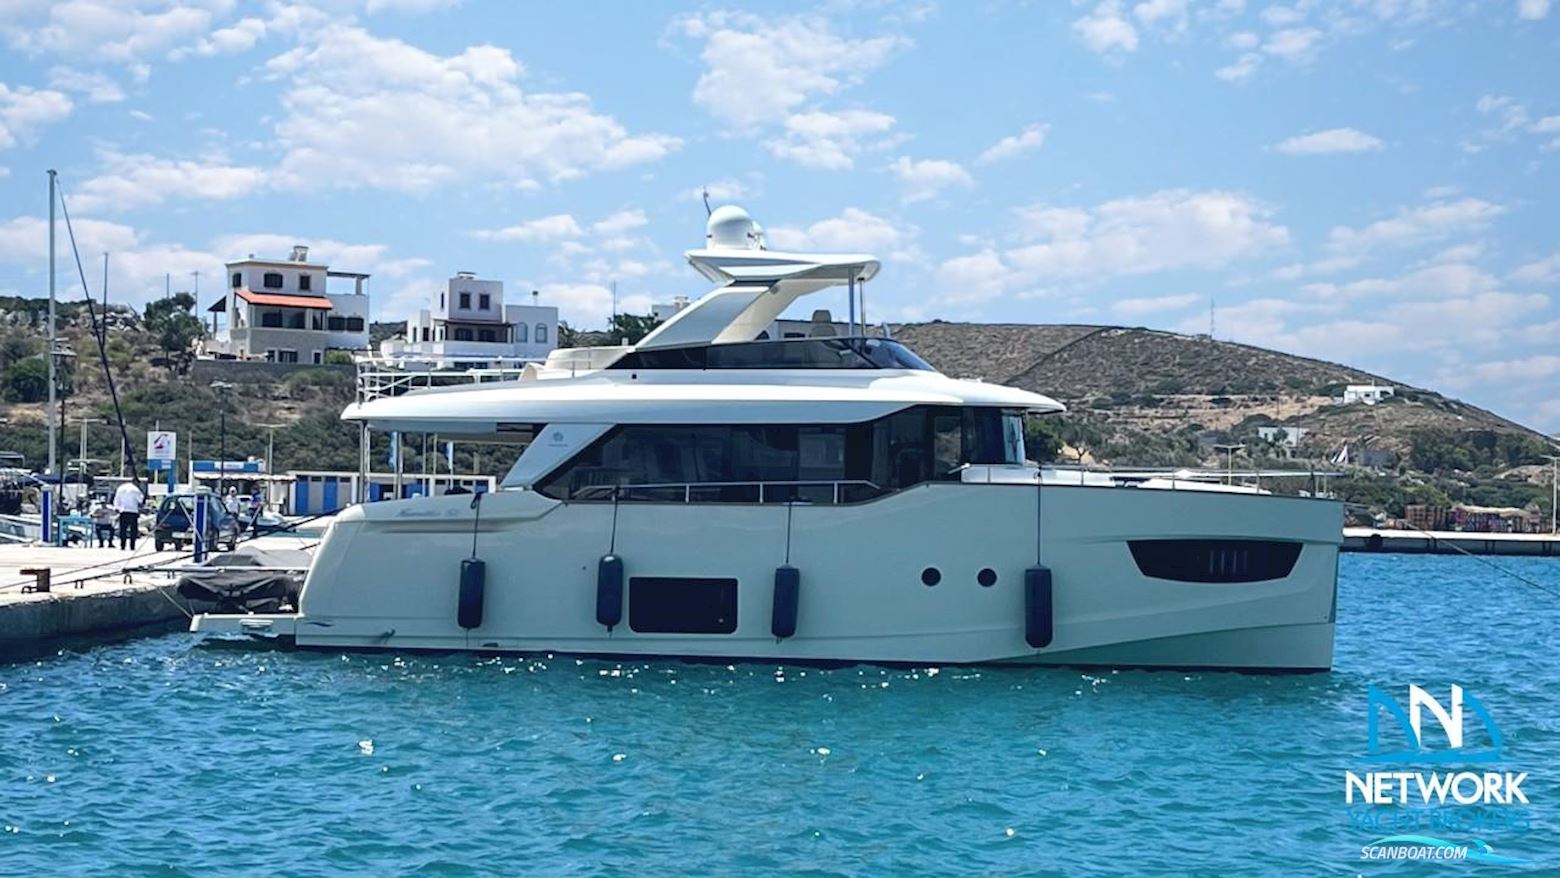 Absolute Navetta 58 Motor boat 2017, with Volvo Penta engine, Greece